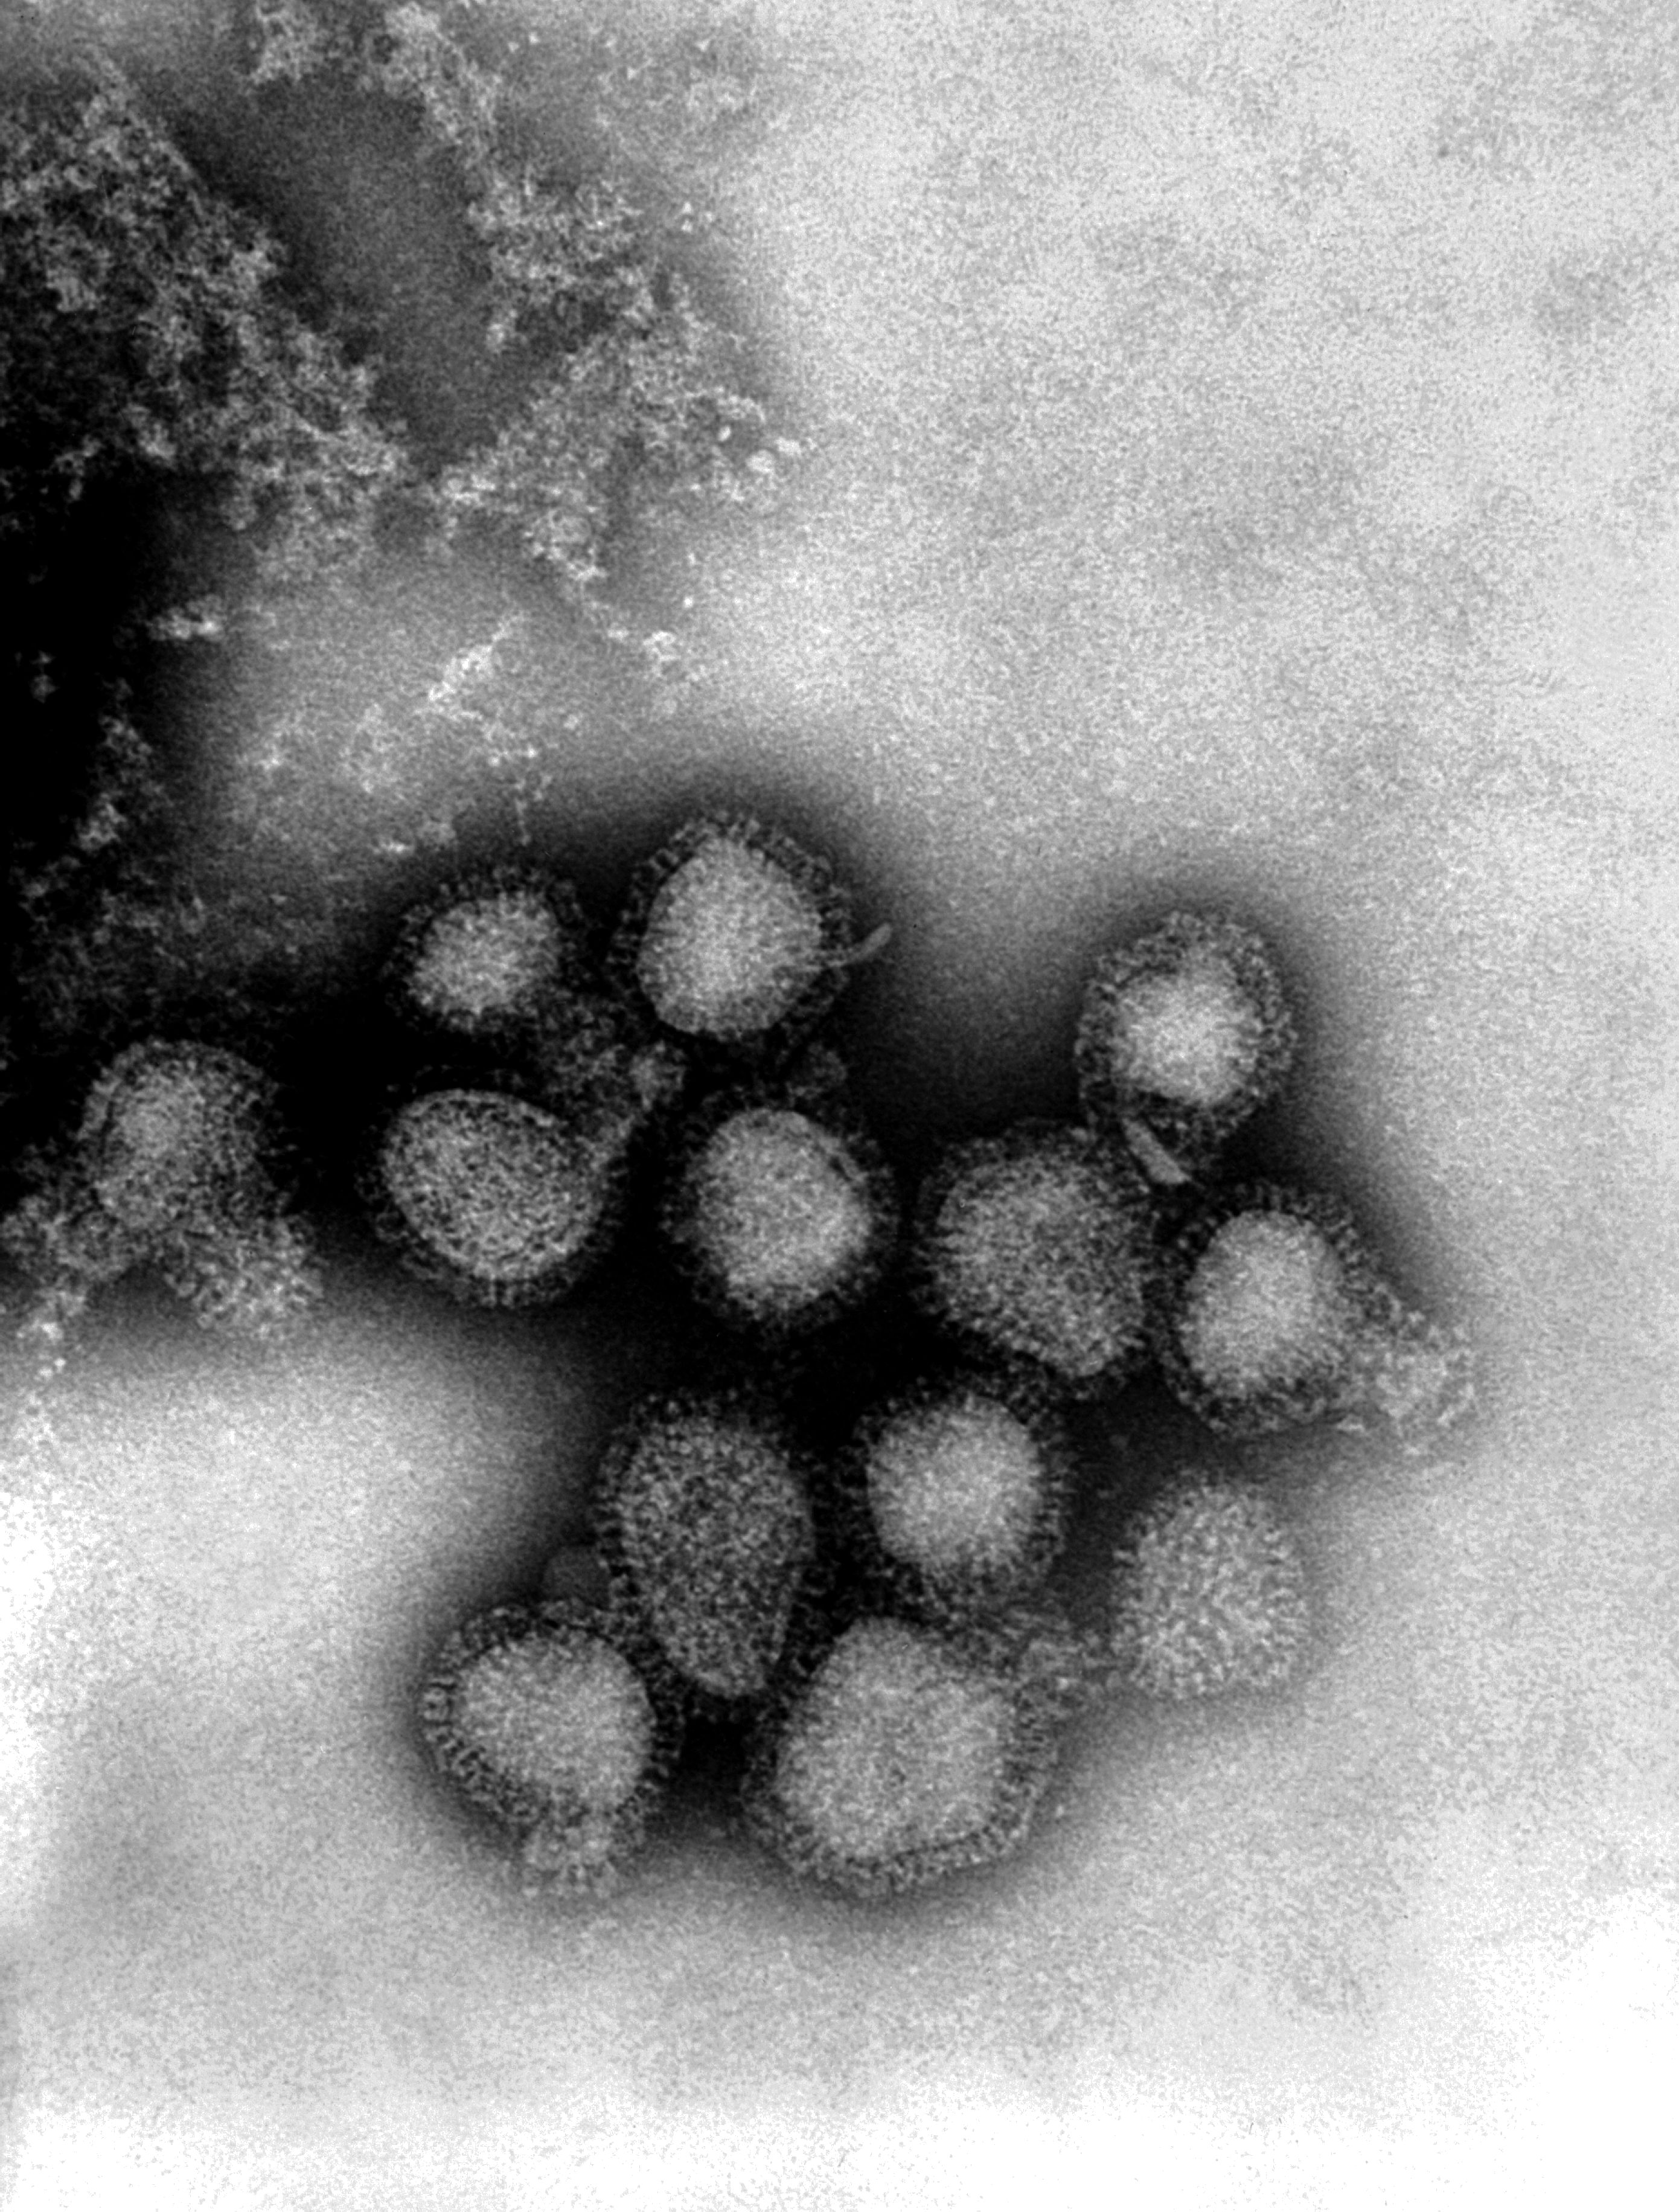 Вирус гриппа коронавирус. Микрофотографии вирусов. Вирус коронавирус под микроскопом. Вирус гриппа микрофотография. Электронная микрофотография коронавируса.